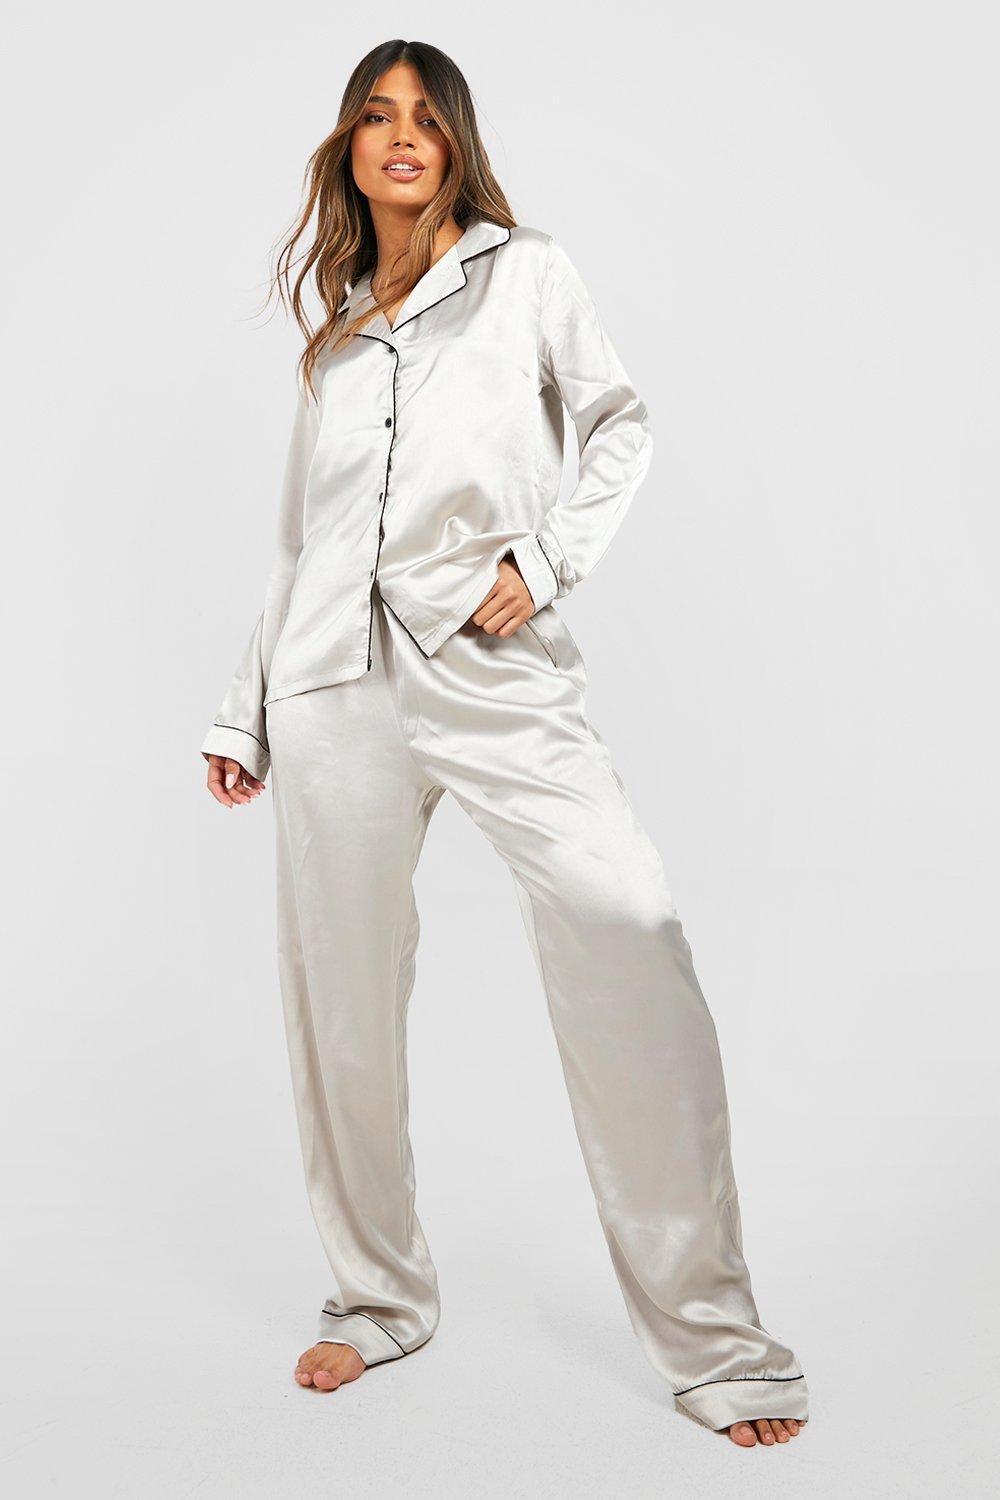 100% Silk Pajamas Set Womens Long Sleeve Sleepwear Button Down